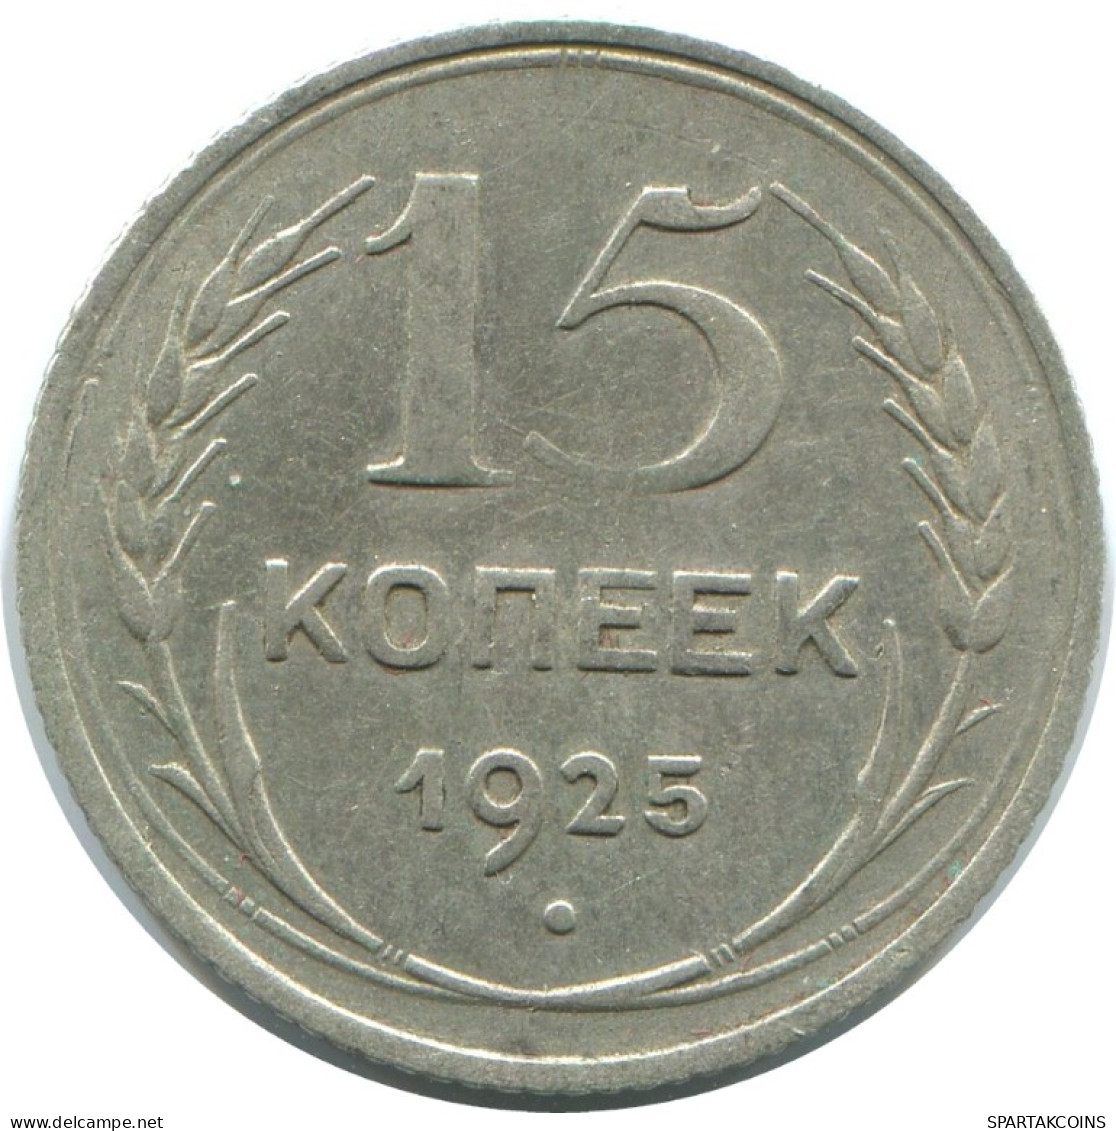 15 KOPEKS 1925 RUSSIA USSR SILVER Coin HIGH GRADE #AF271.4.U.A - Russland